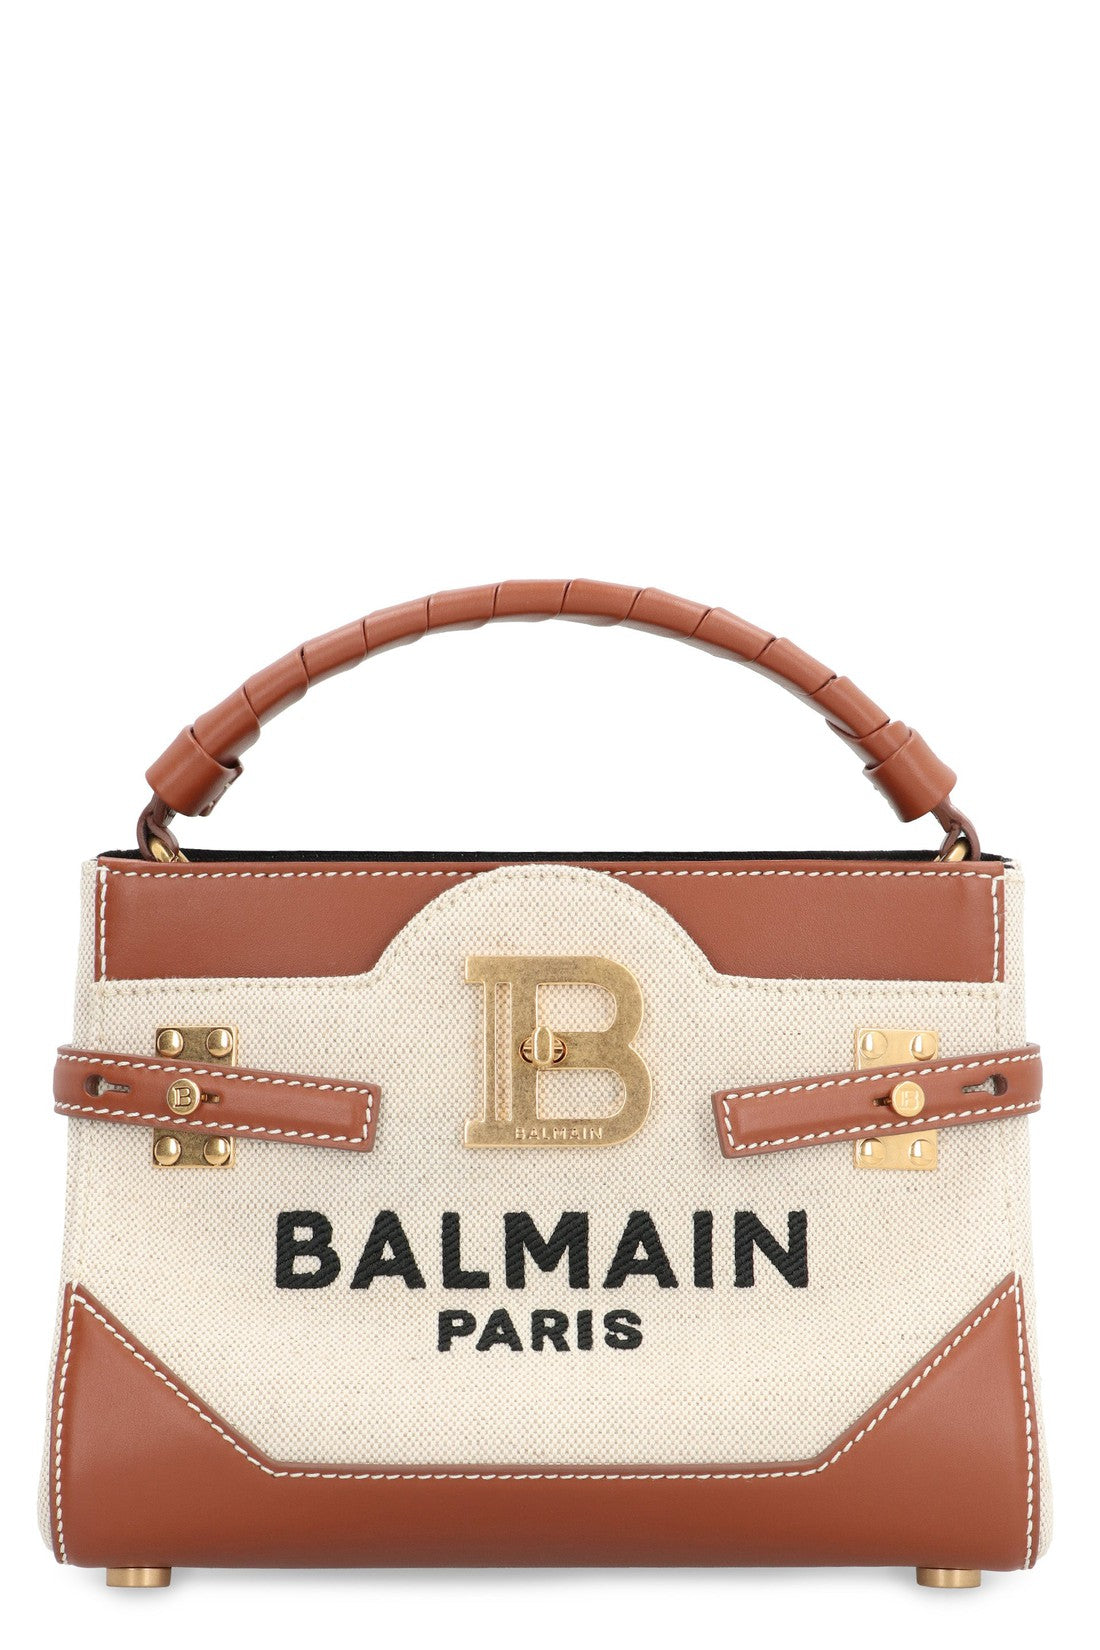 Balmain-OUTLET-SALE-B-Buzz 22 canvas handbag-ARCHIVIST